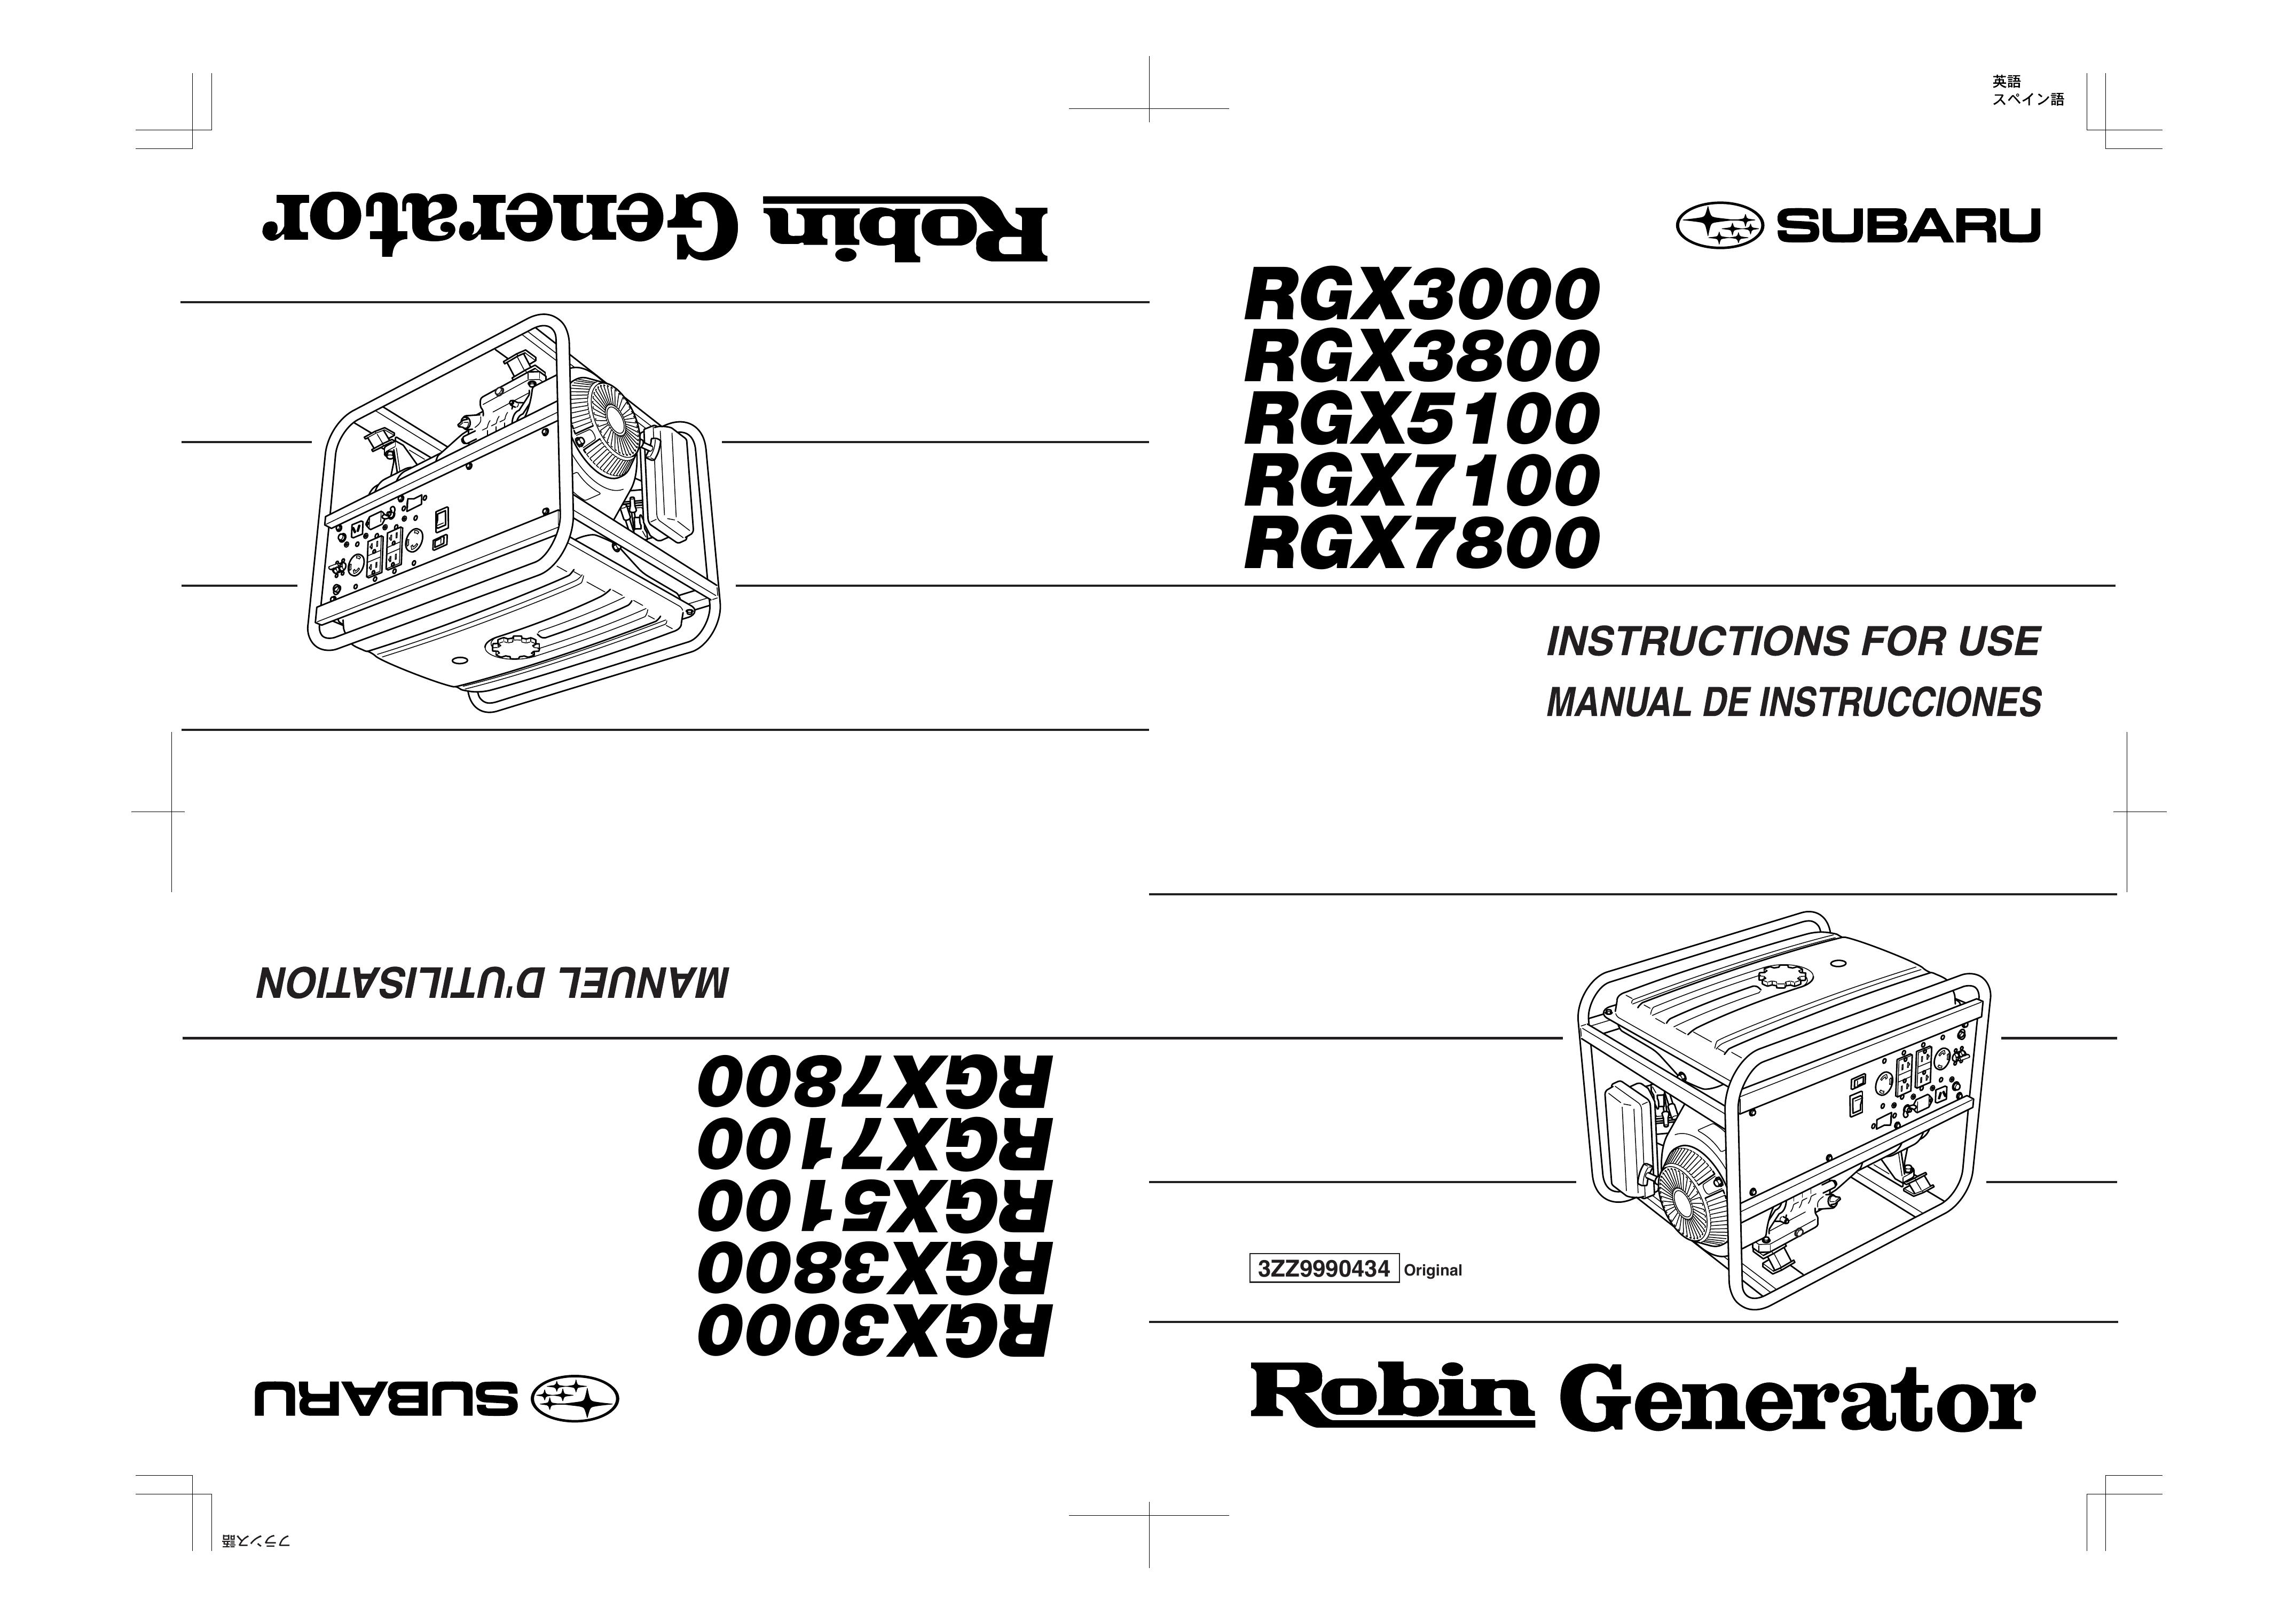 Subaru RGX3800 Portable Generator User Manual